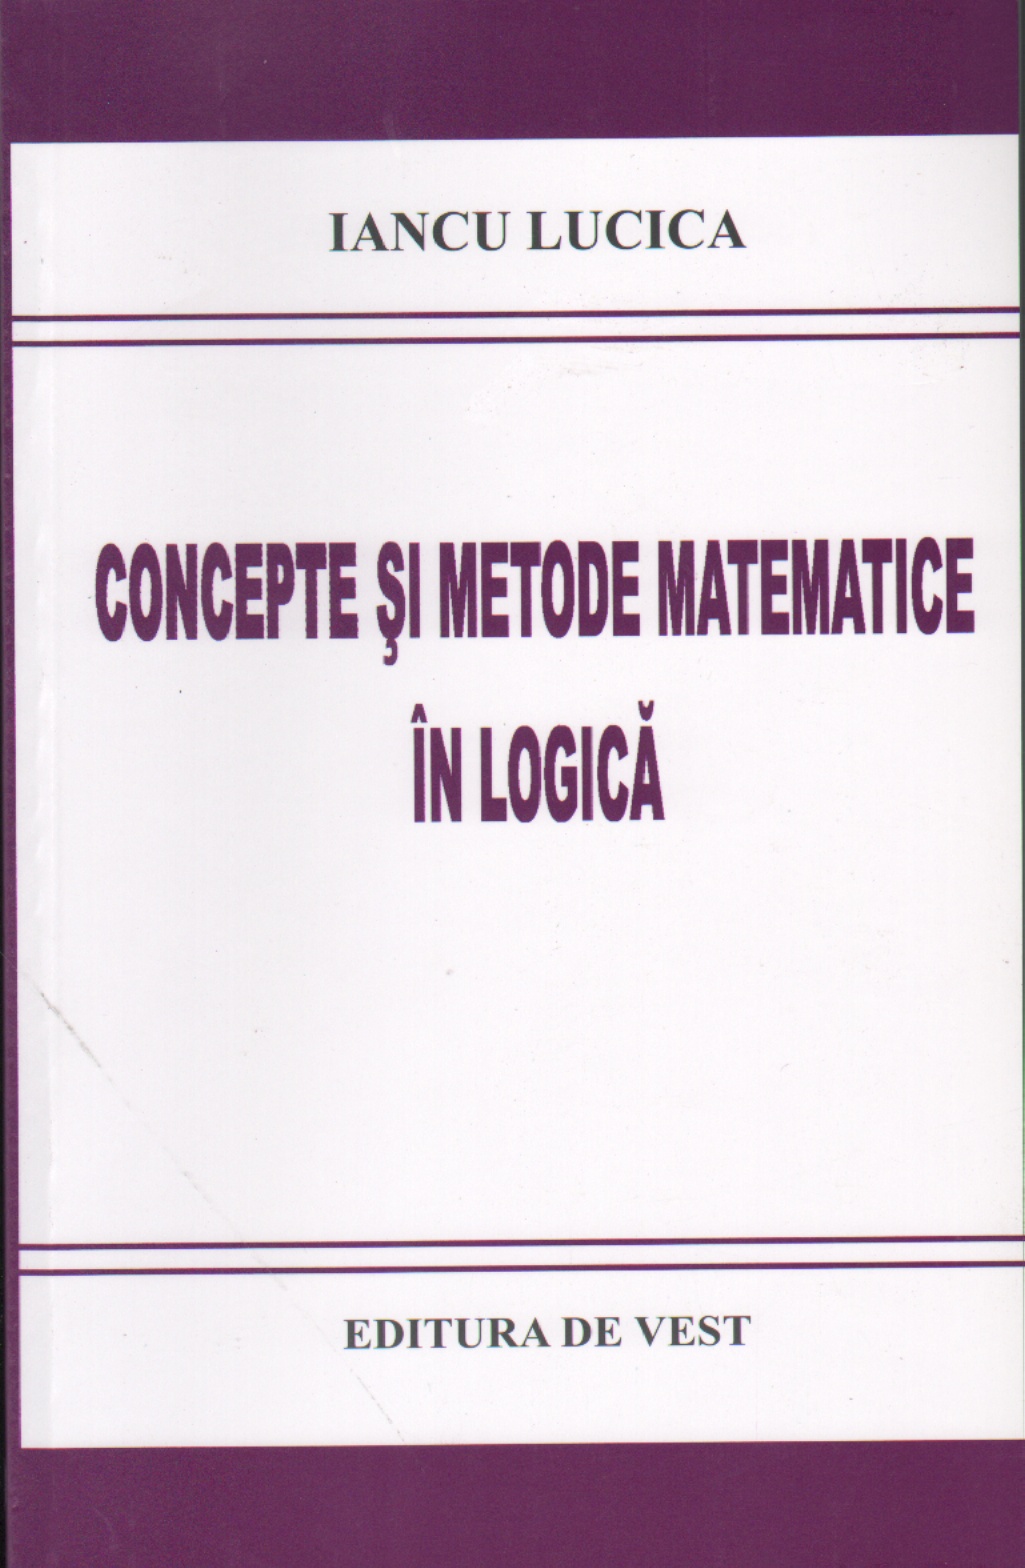 Concepte si metode matematice in logica | Iancu Lucica